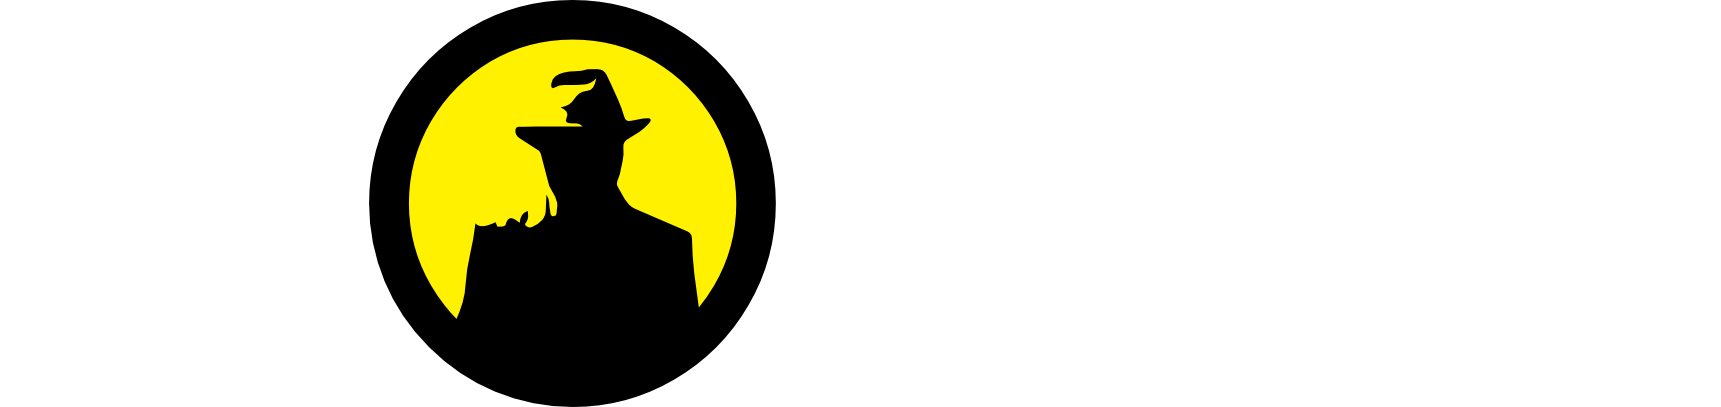 Vinovinkkeli logo